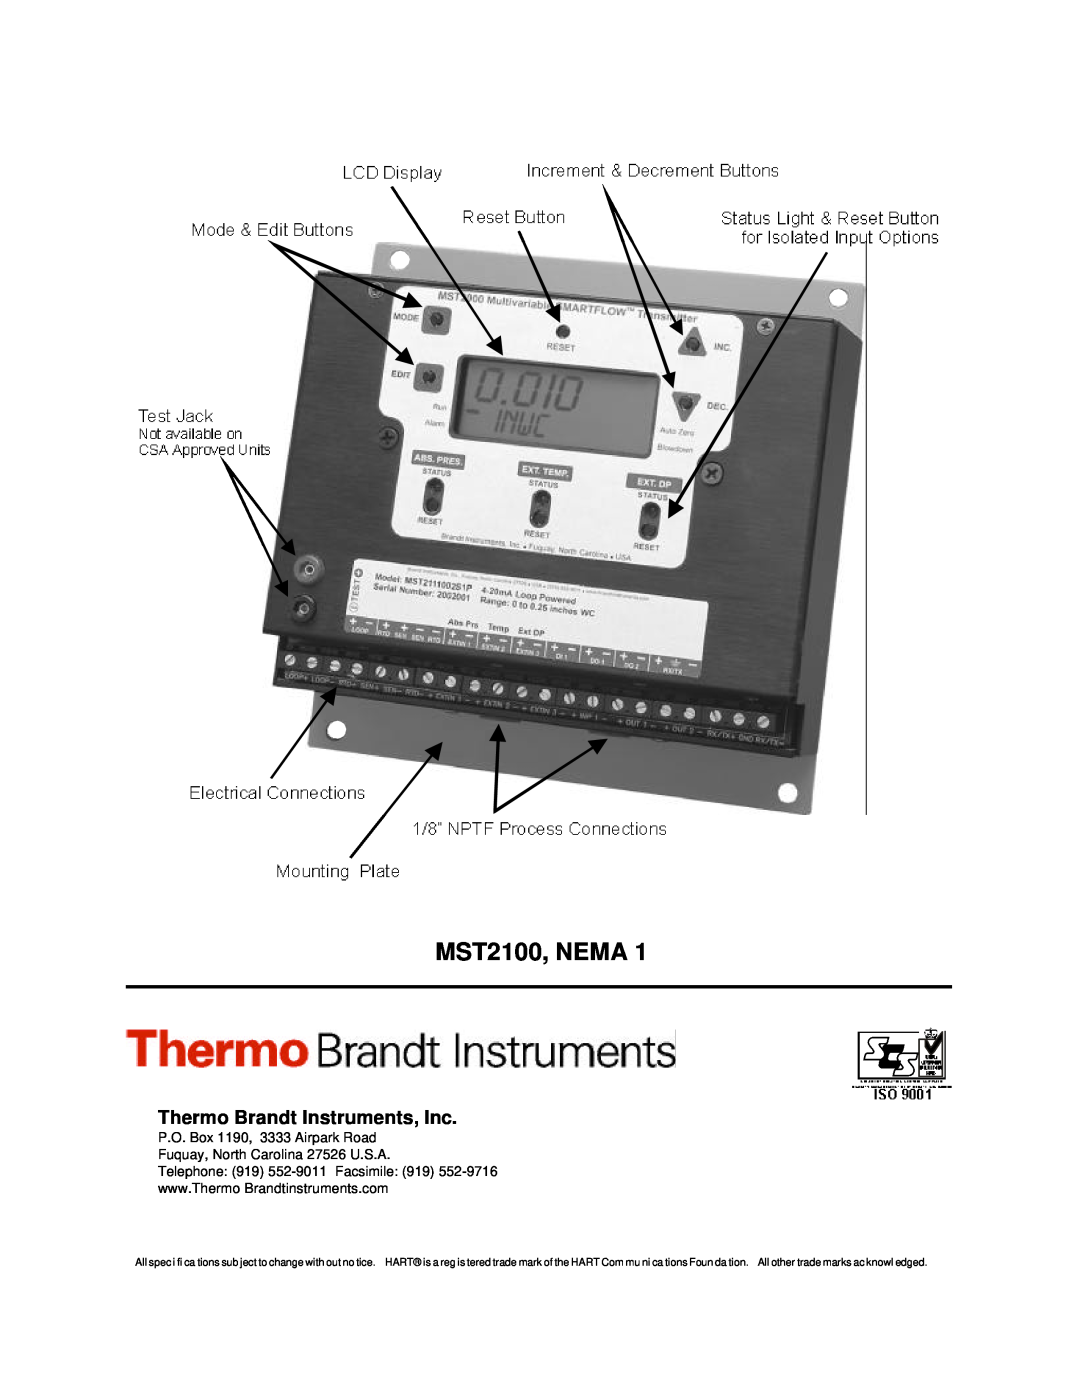 Tamron MST2000 operation manual MST2100, NEMA, Thermo Brandt Instruments, Inc 